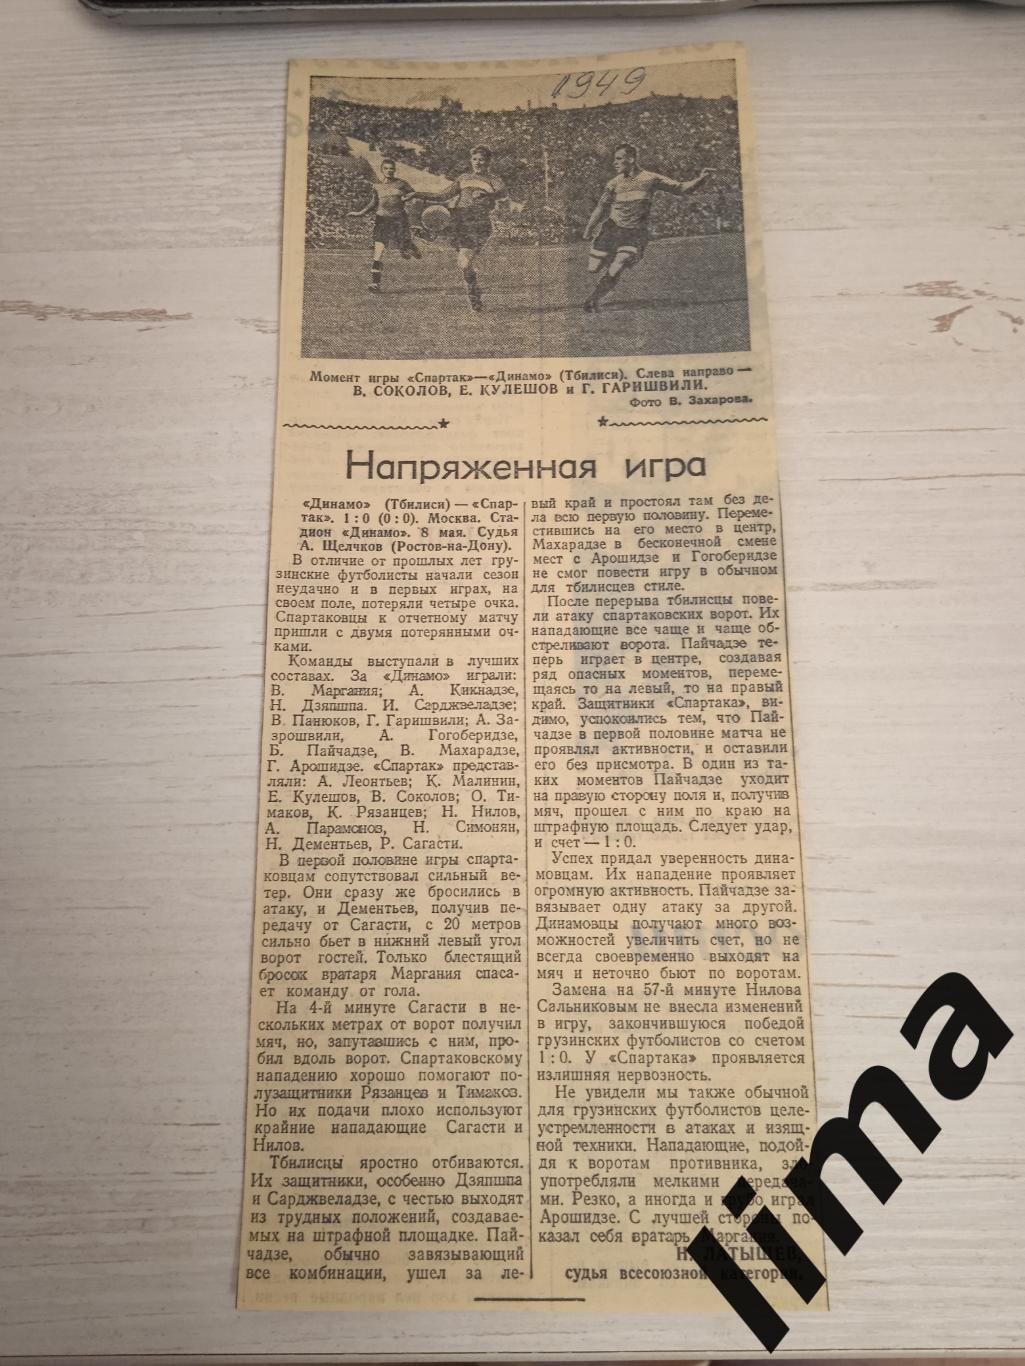 Вырезка Советский спорт Динамо Тбилиси-Спартак Москва -1949 год